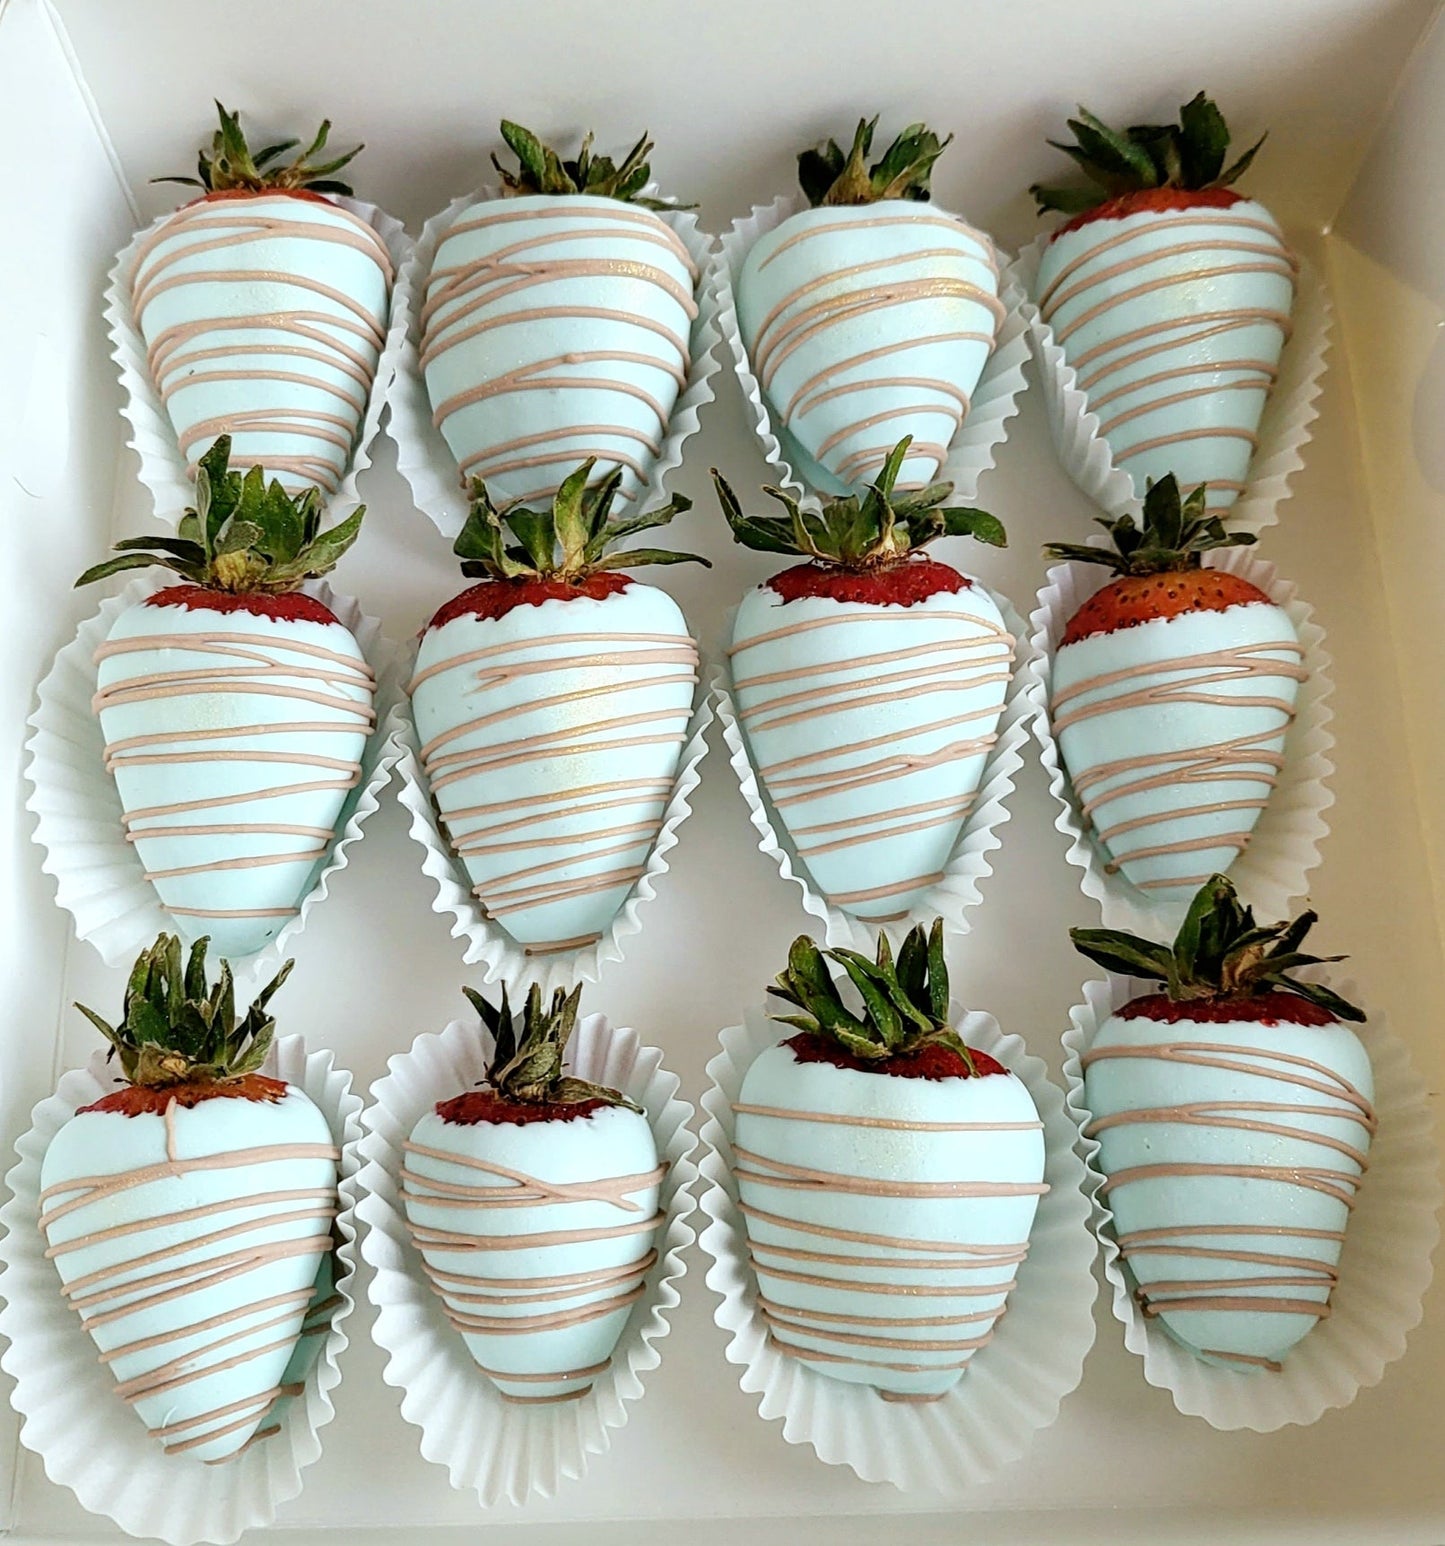 Chocolate Covered Strawberries - Elegant Impressions Bakery